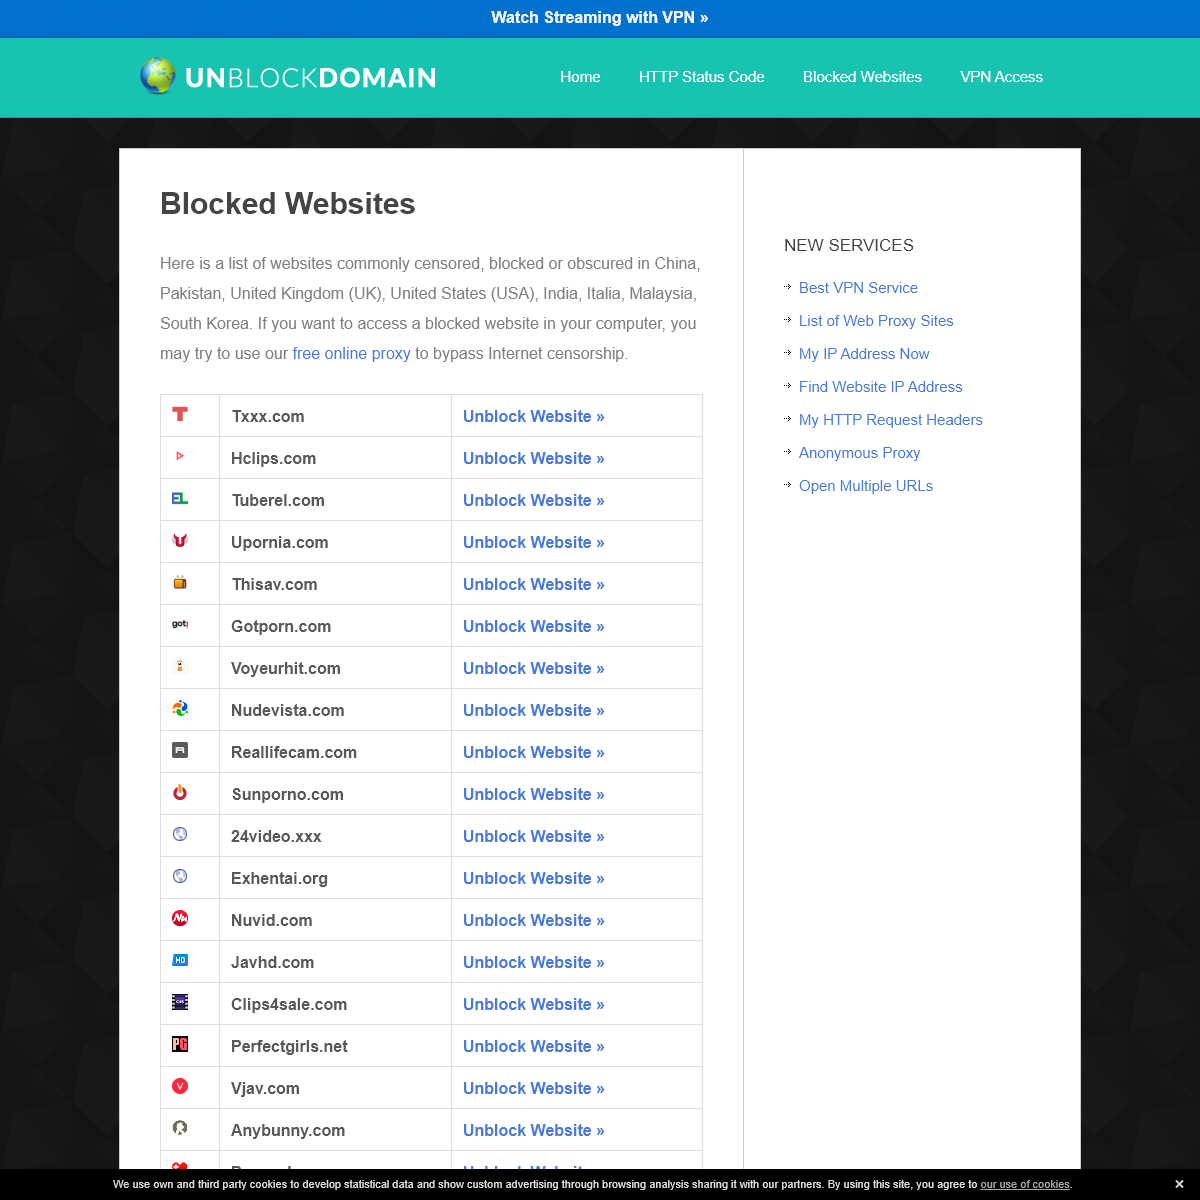 A complete backup of https://www.unblockdomain.com/blocked-websites/